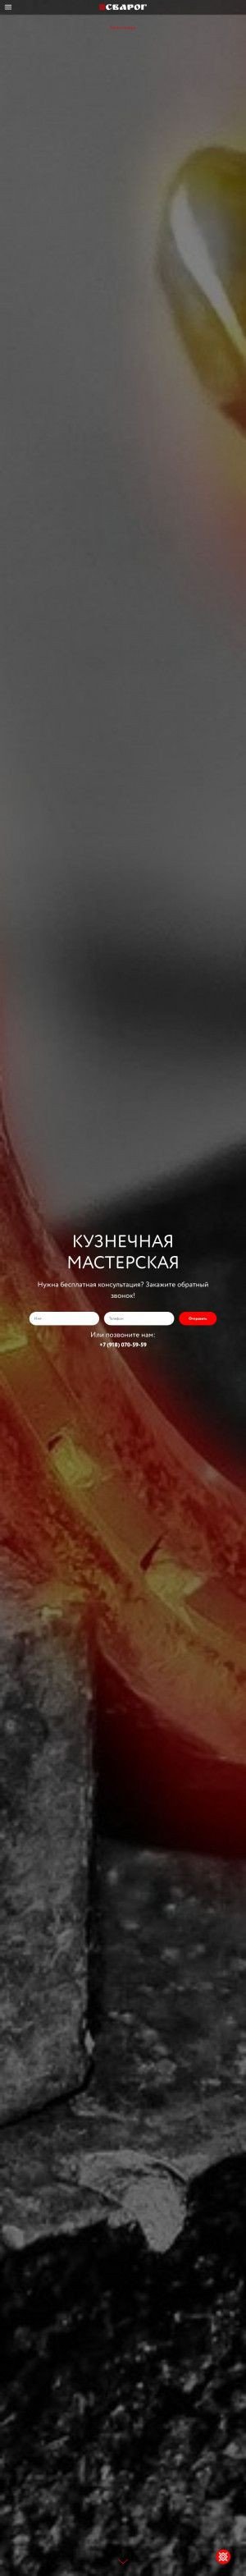 Предпросмотр для www.svarog23.ru — Компания Сварог